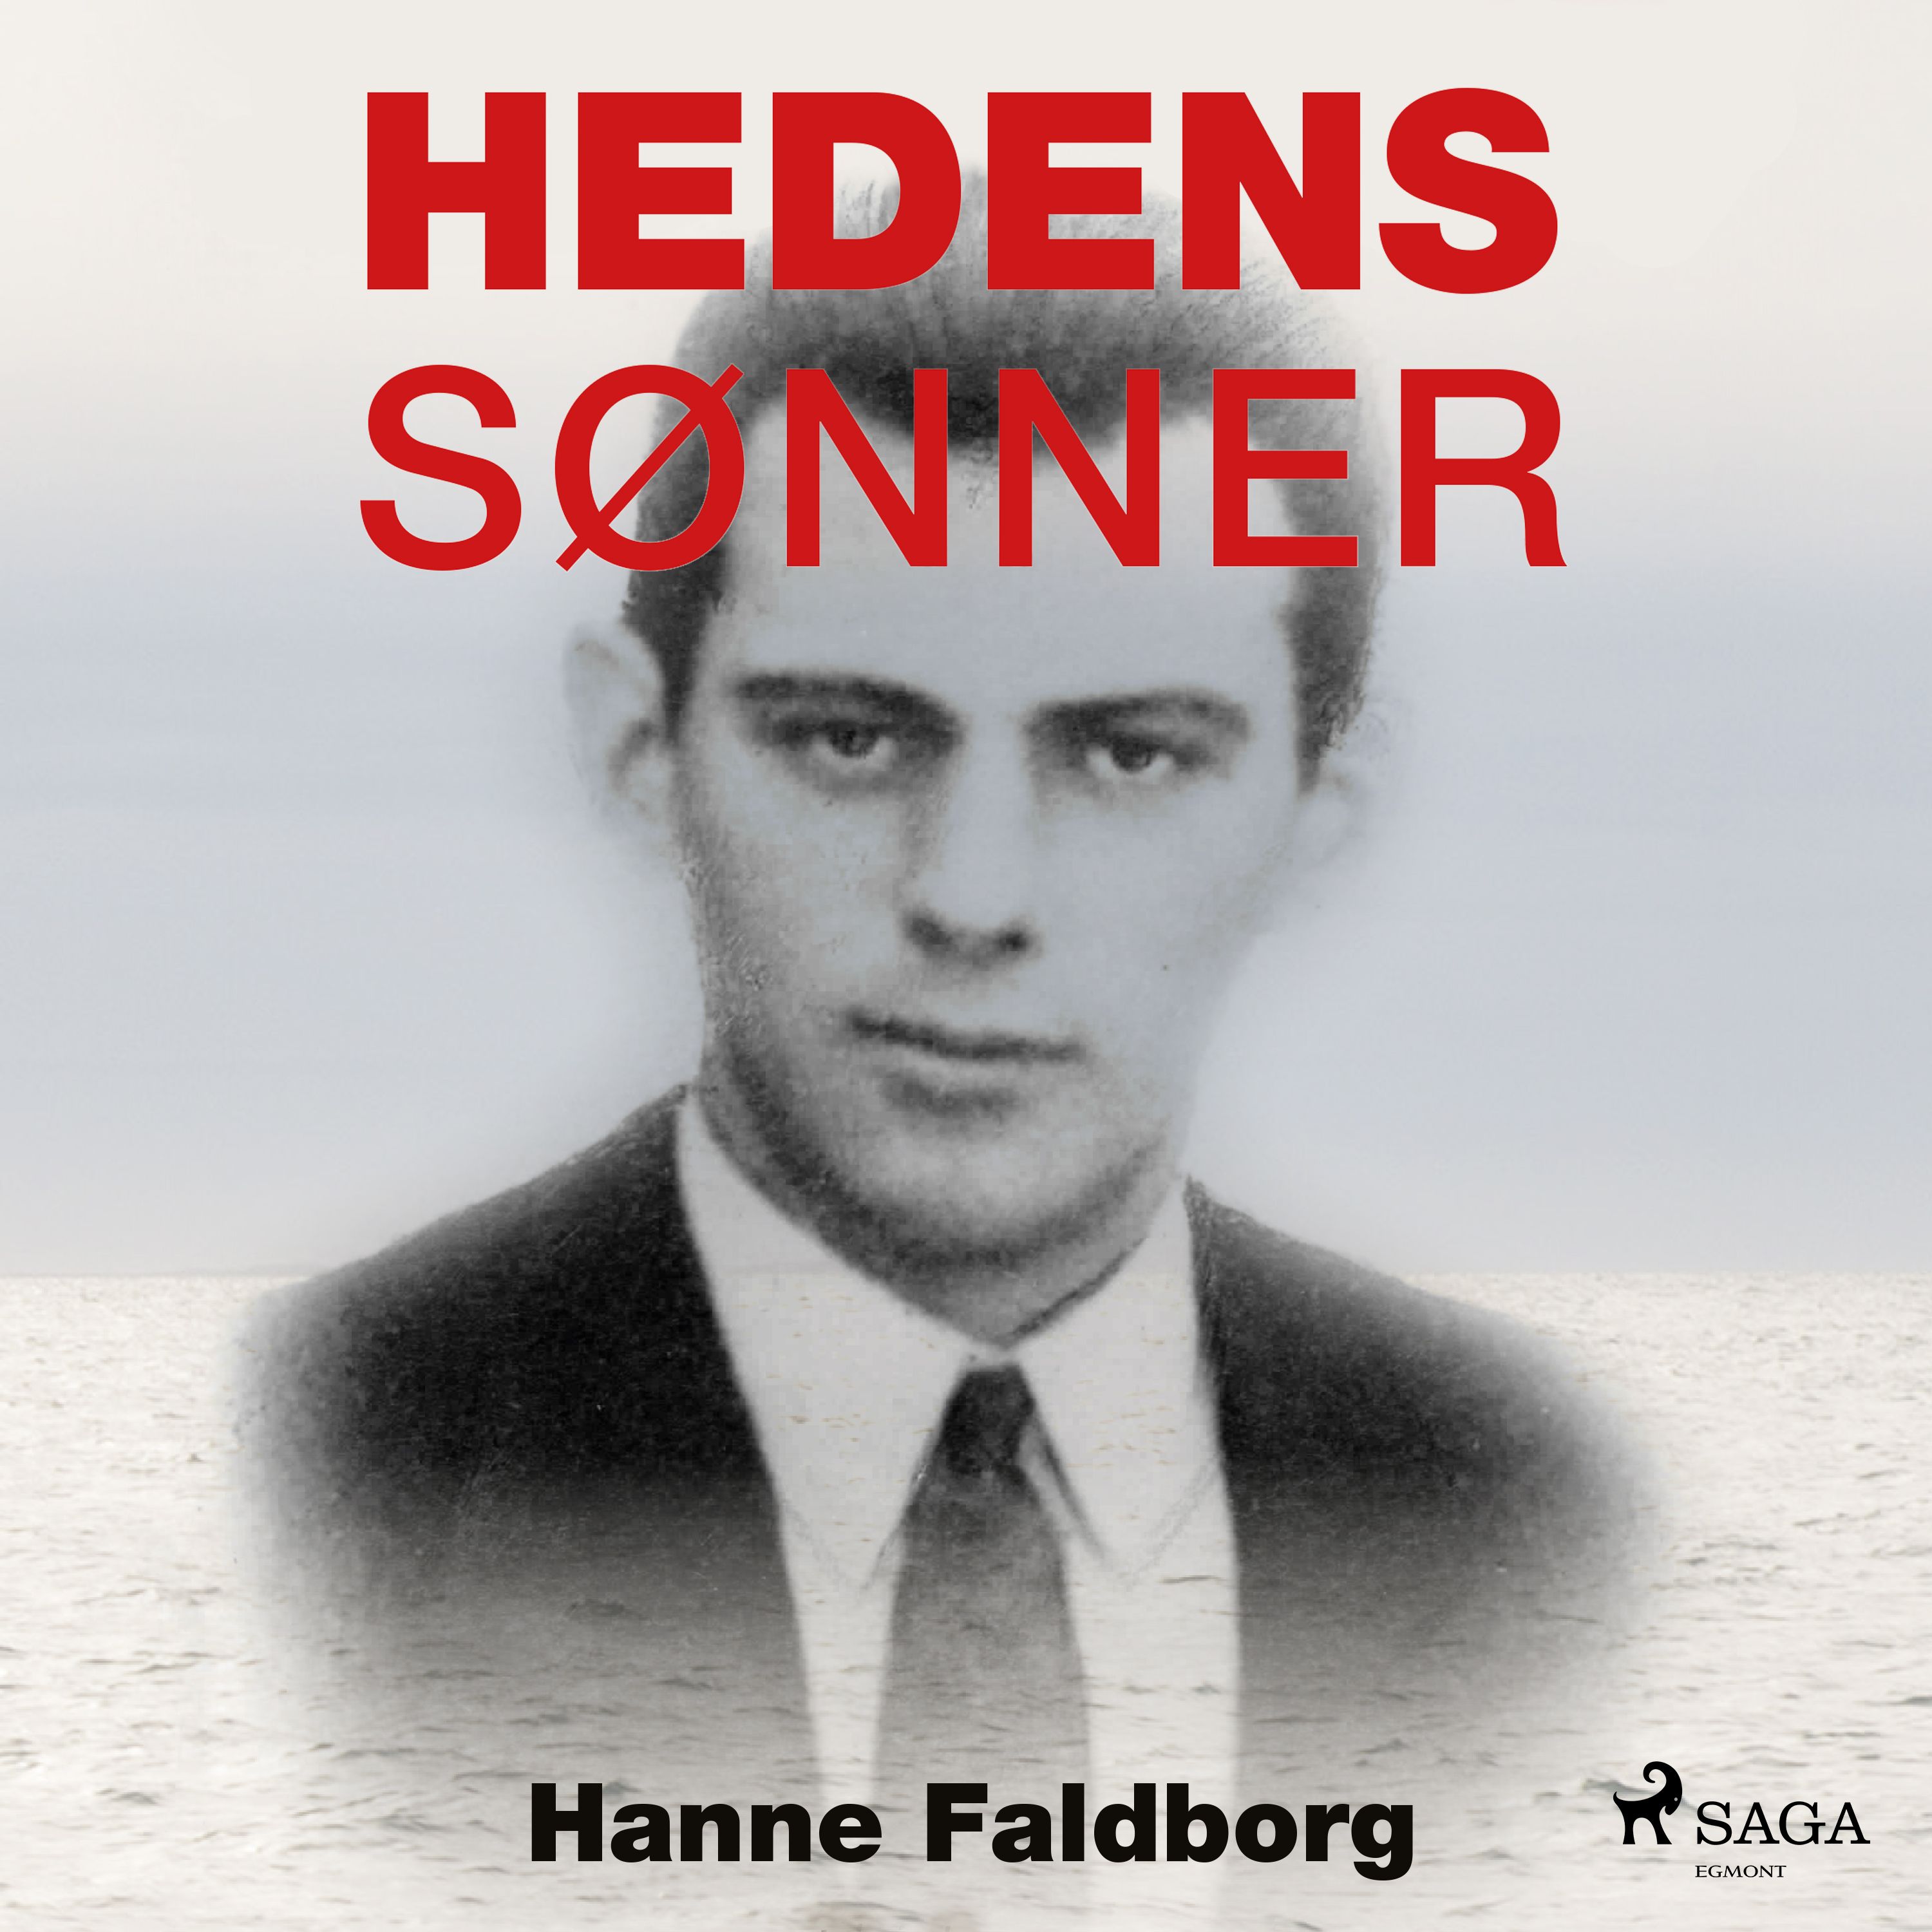 Hedens sønner, ljudbok av Hanne Faldborg